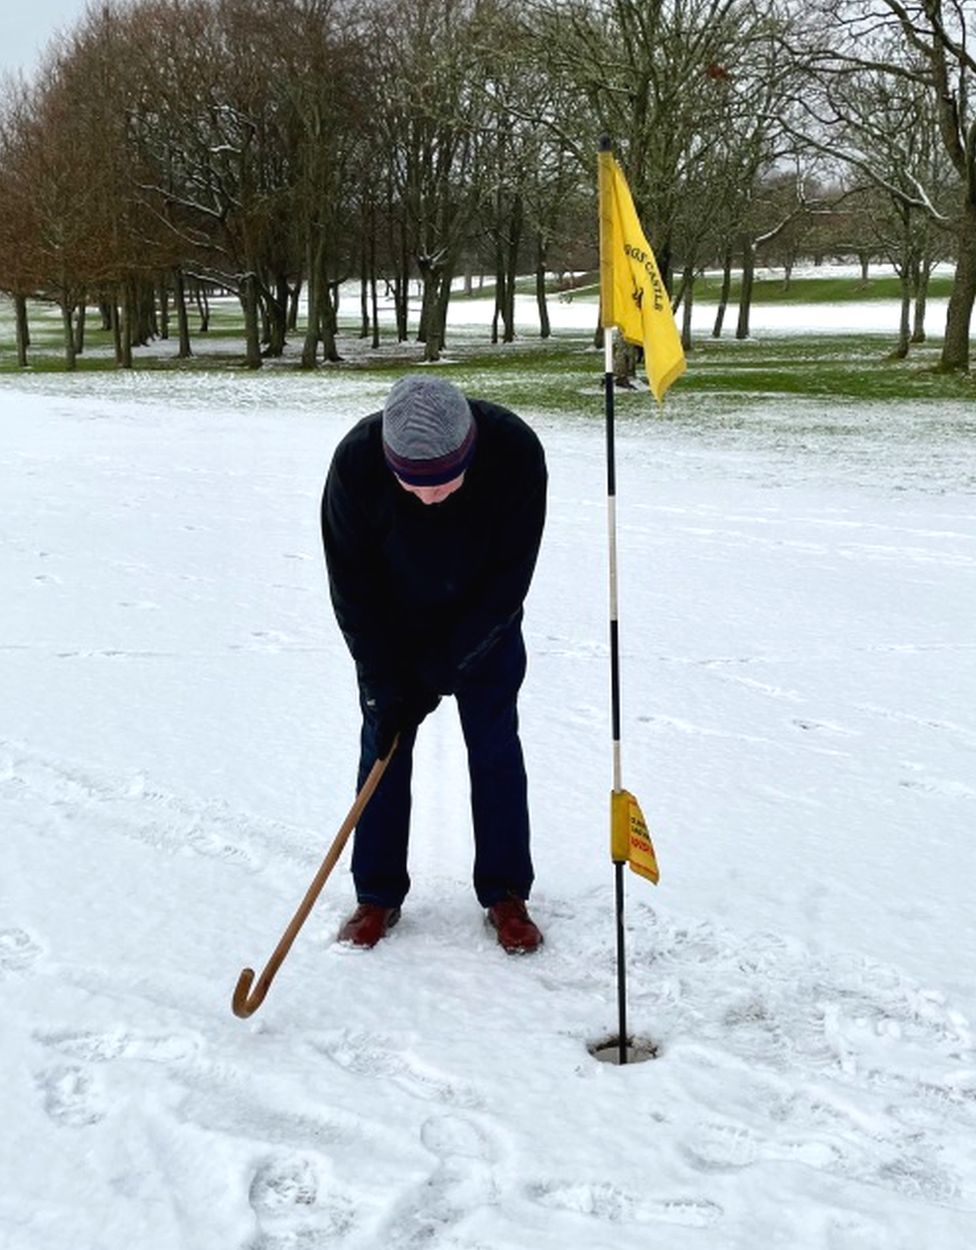 Golf in snow